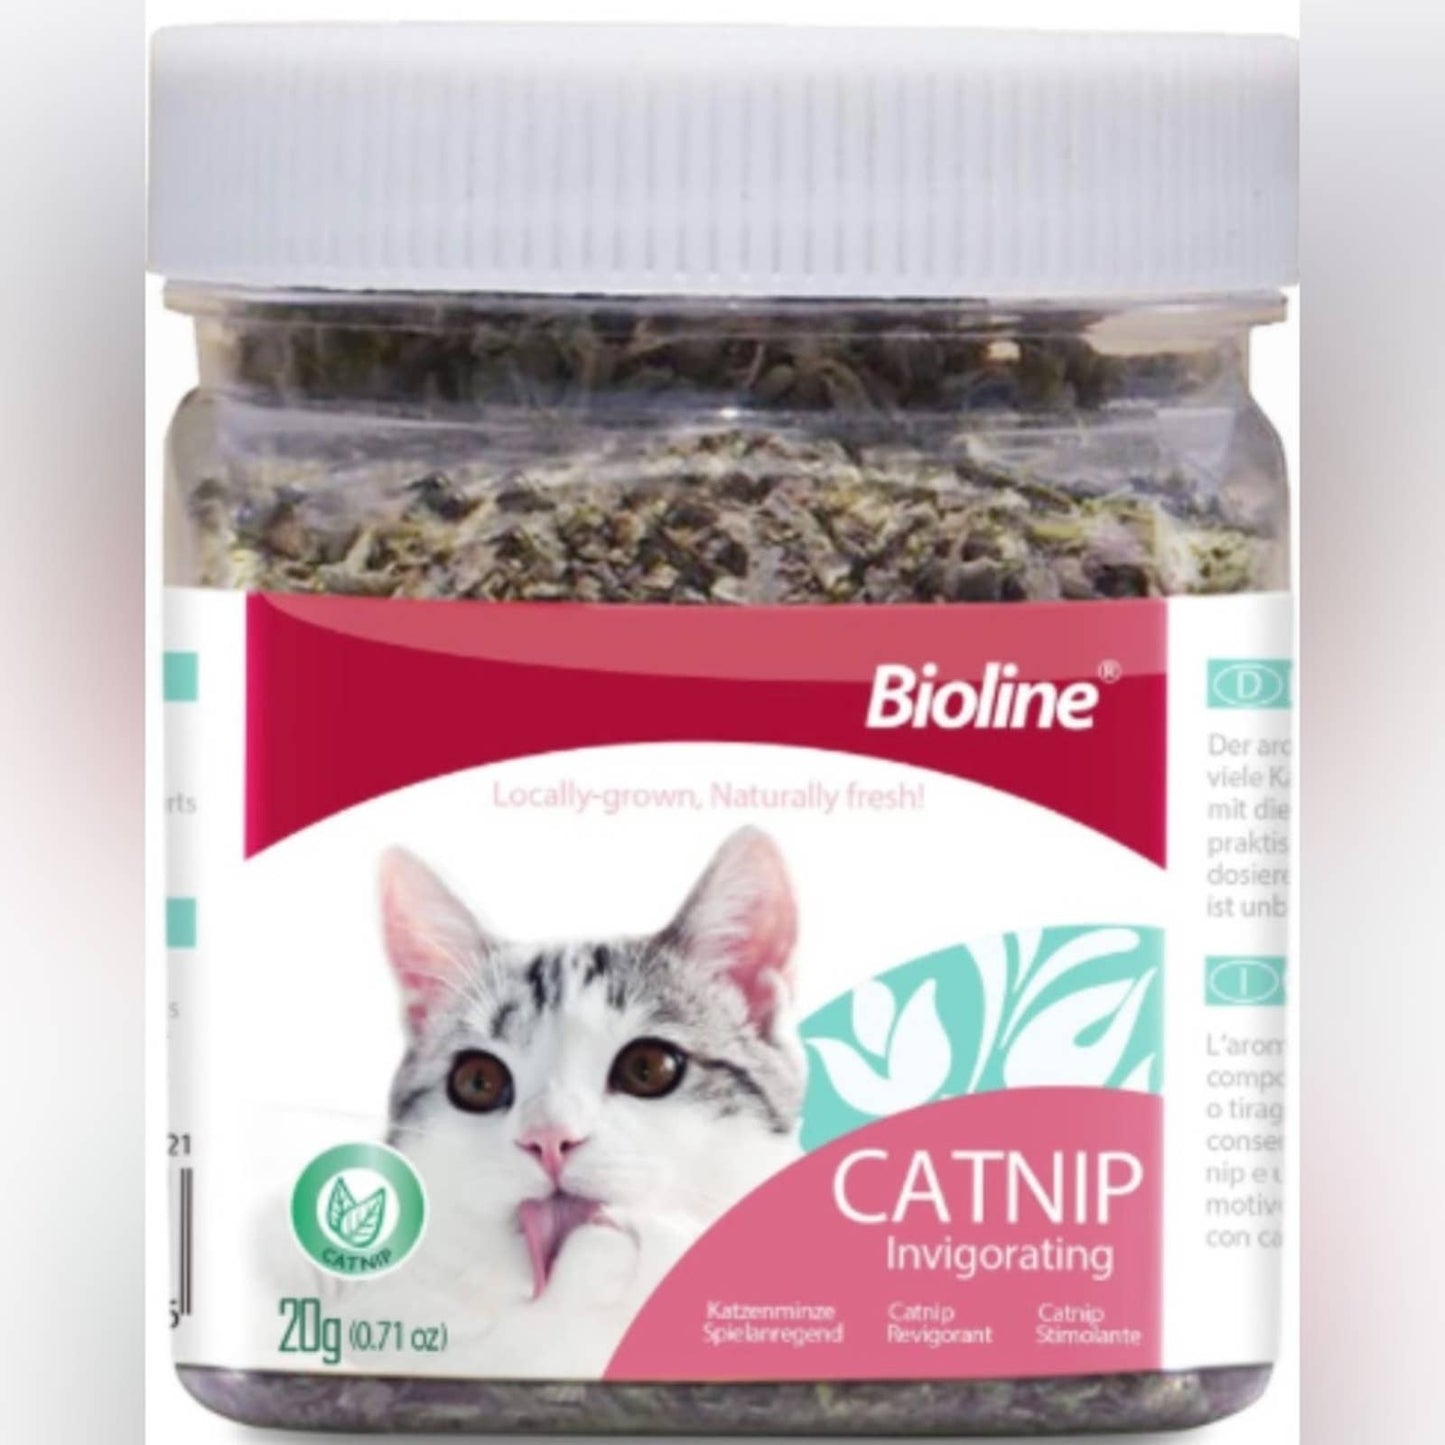 Bioline Catnip Organic Premium Potent Catnip Blend Safe for Cats Use on Cat Toys